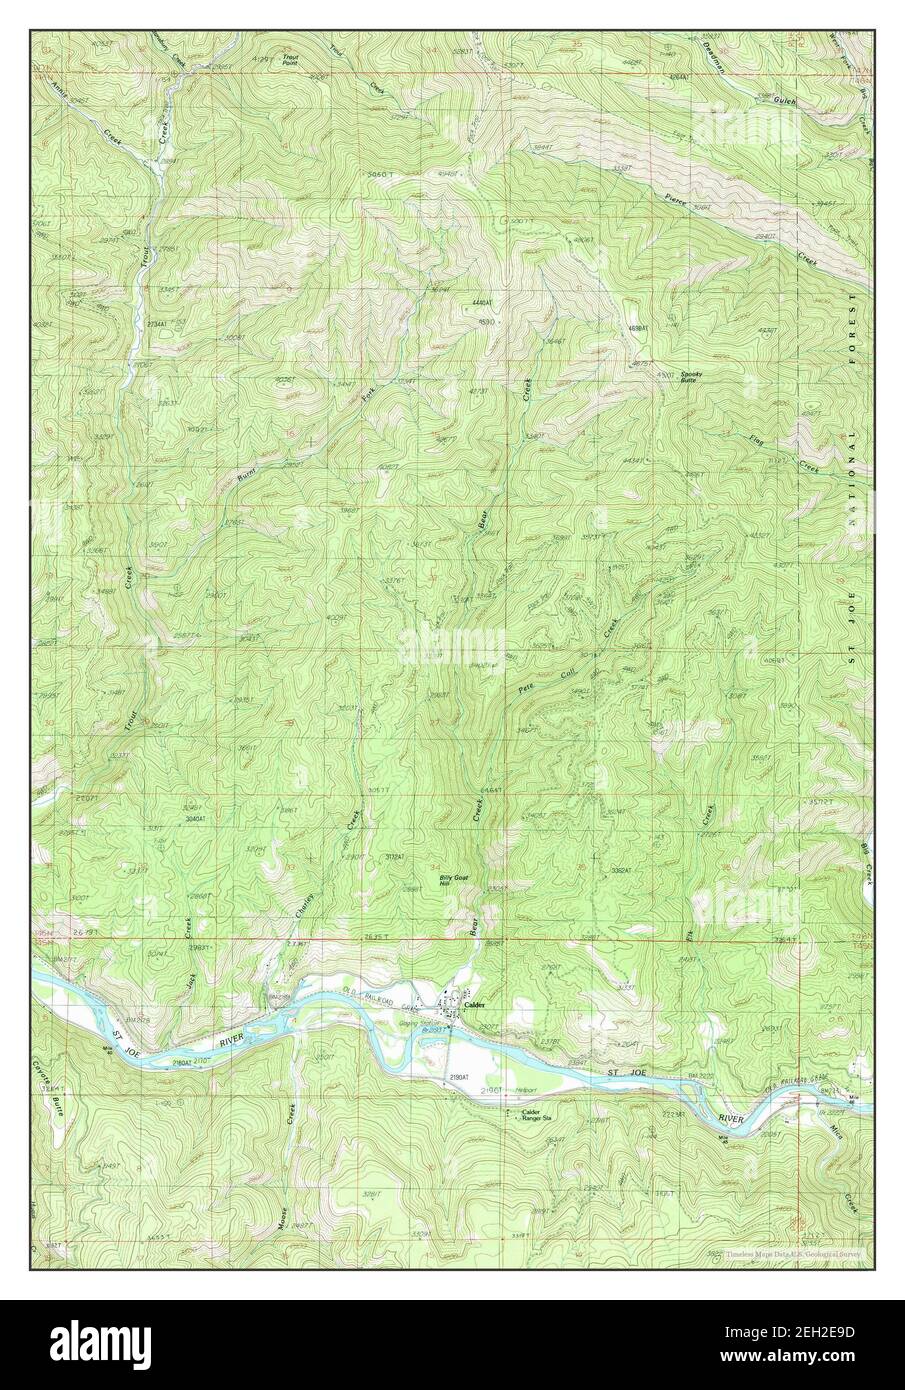 Calder, Idaho, map 1988, 1:24000, United States of America by Timeless Maps, data U.S. Geological Survey Stock Photo